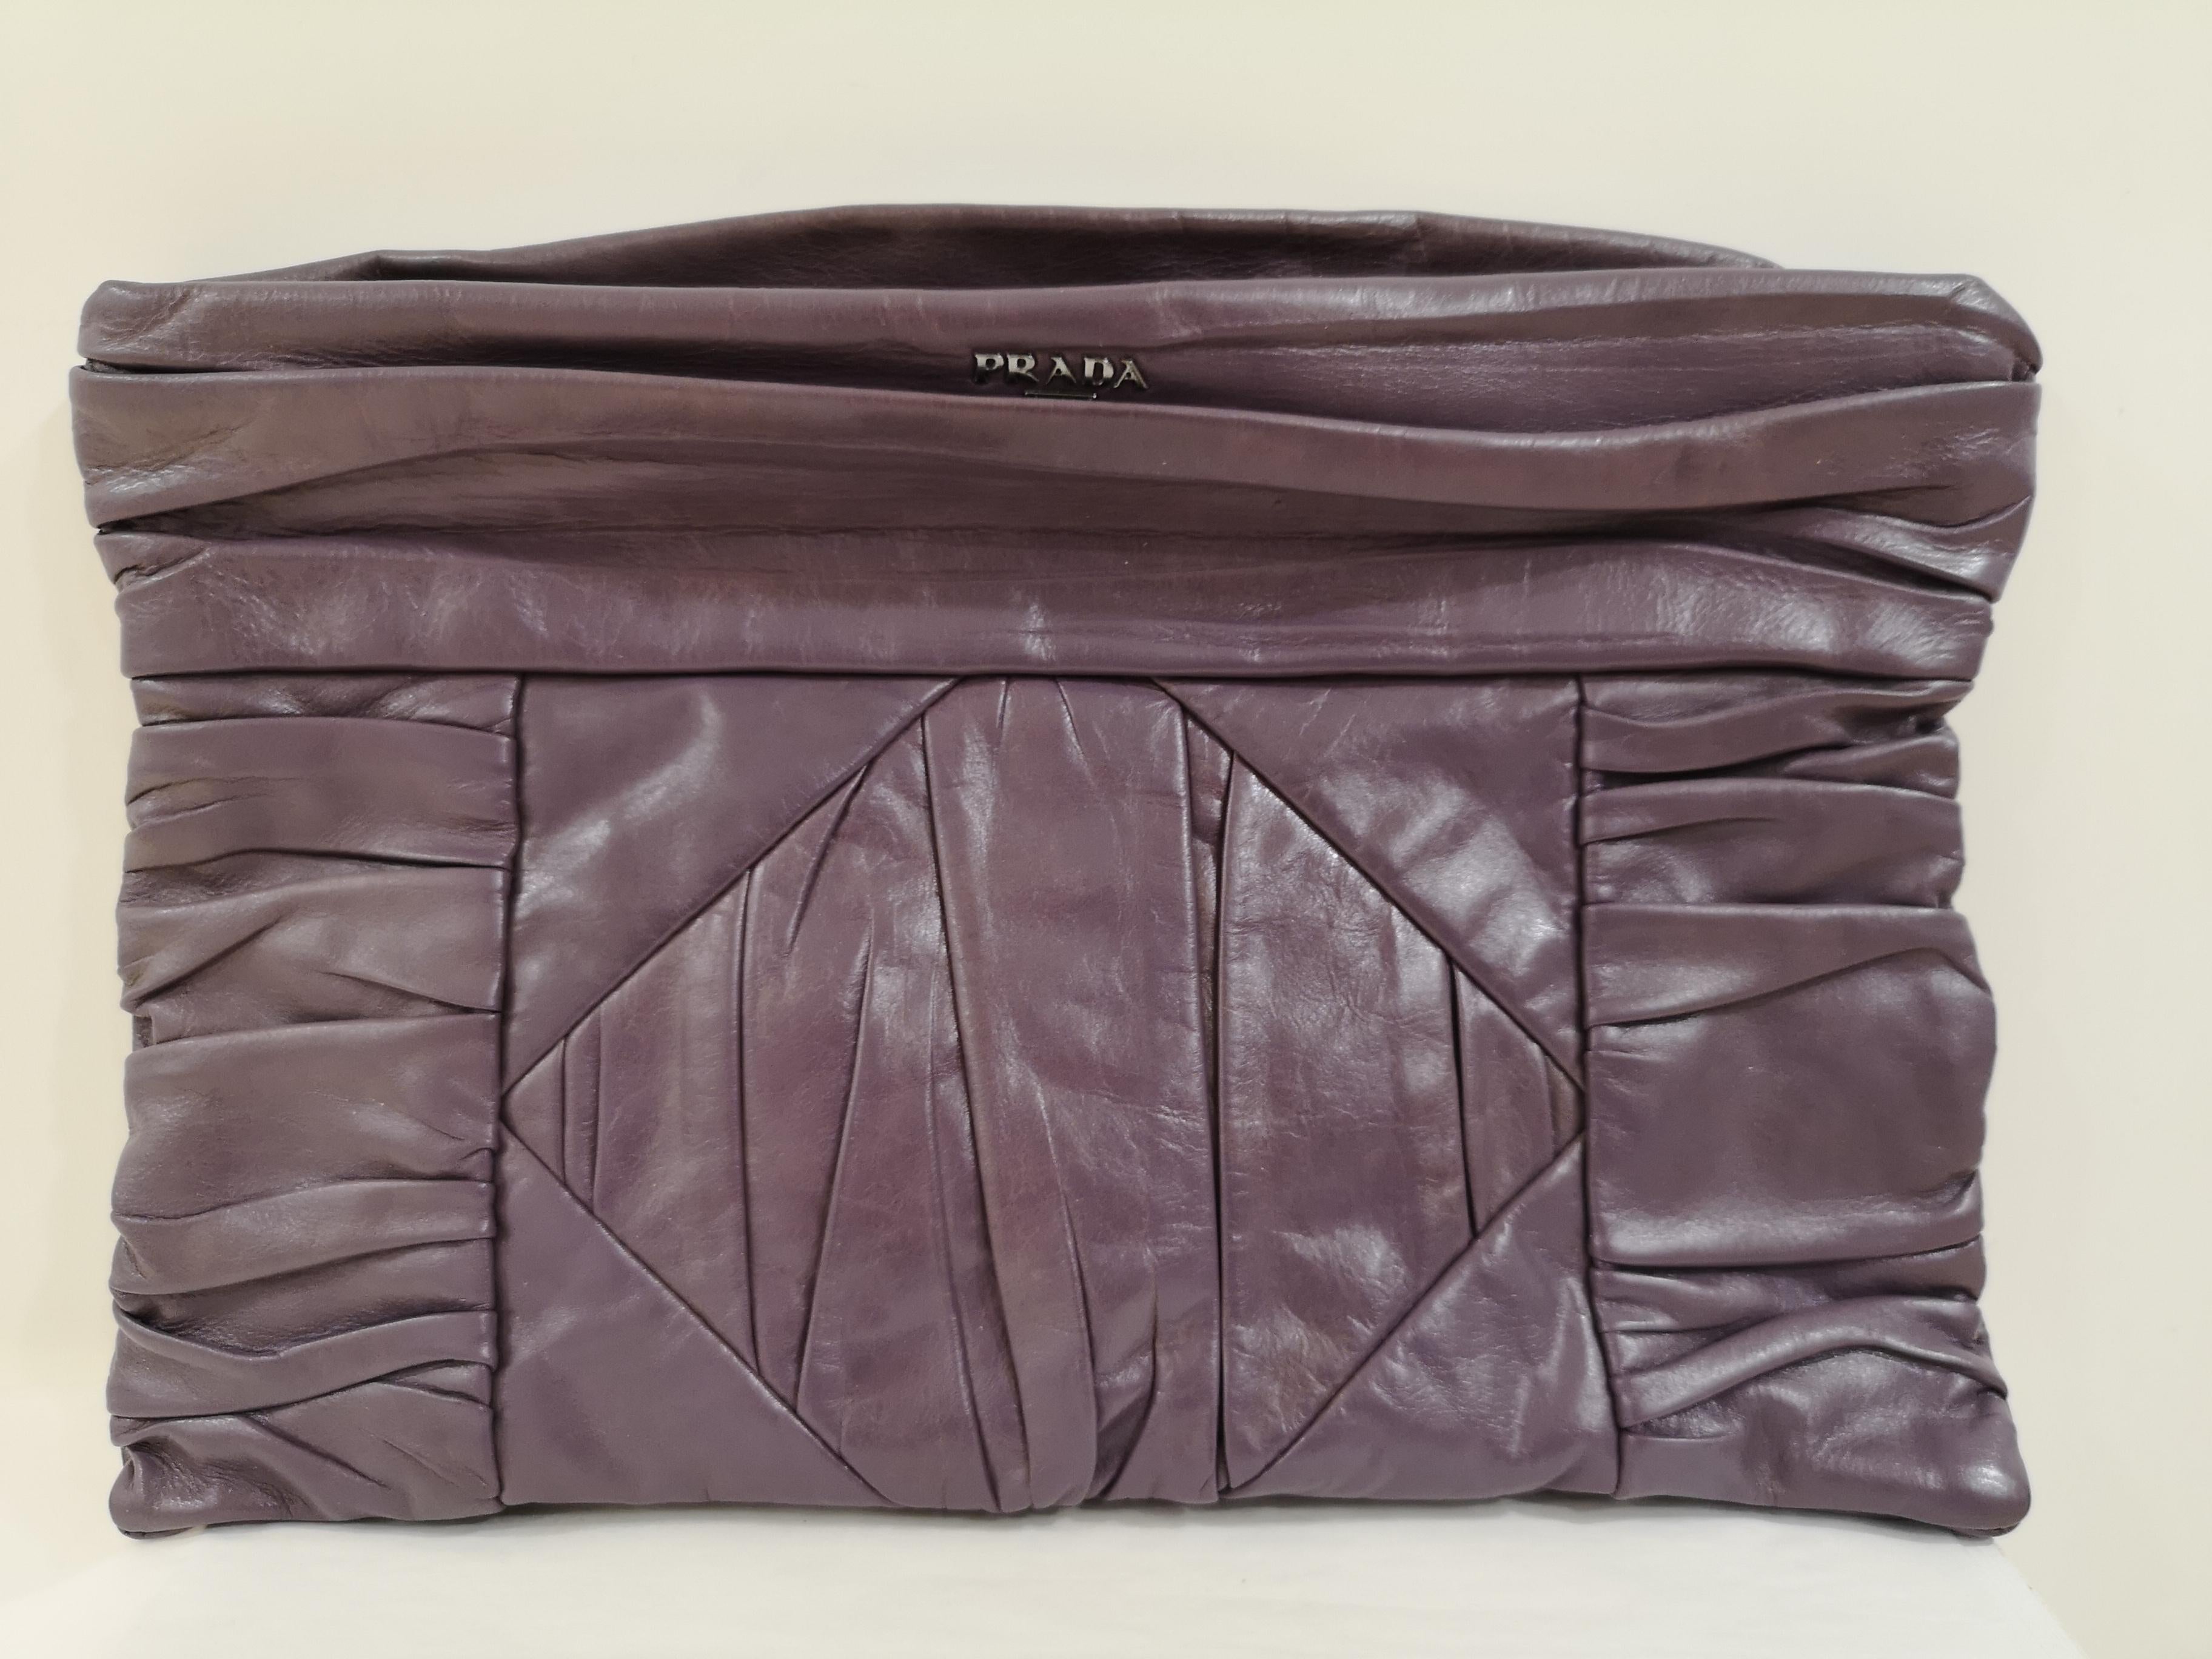 Prada purple leather handbag 3